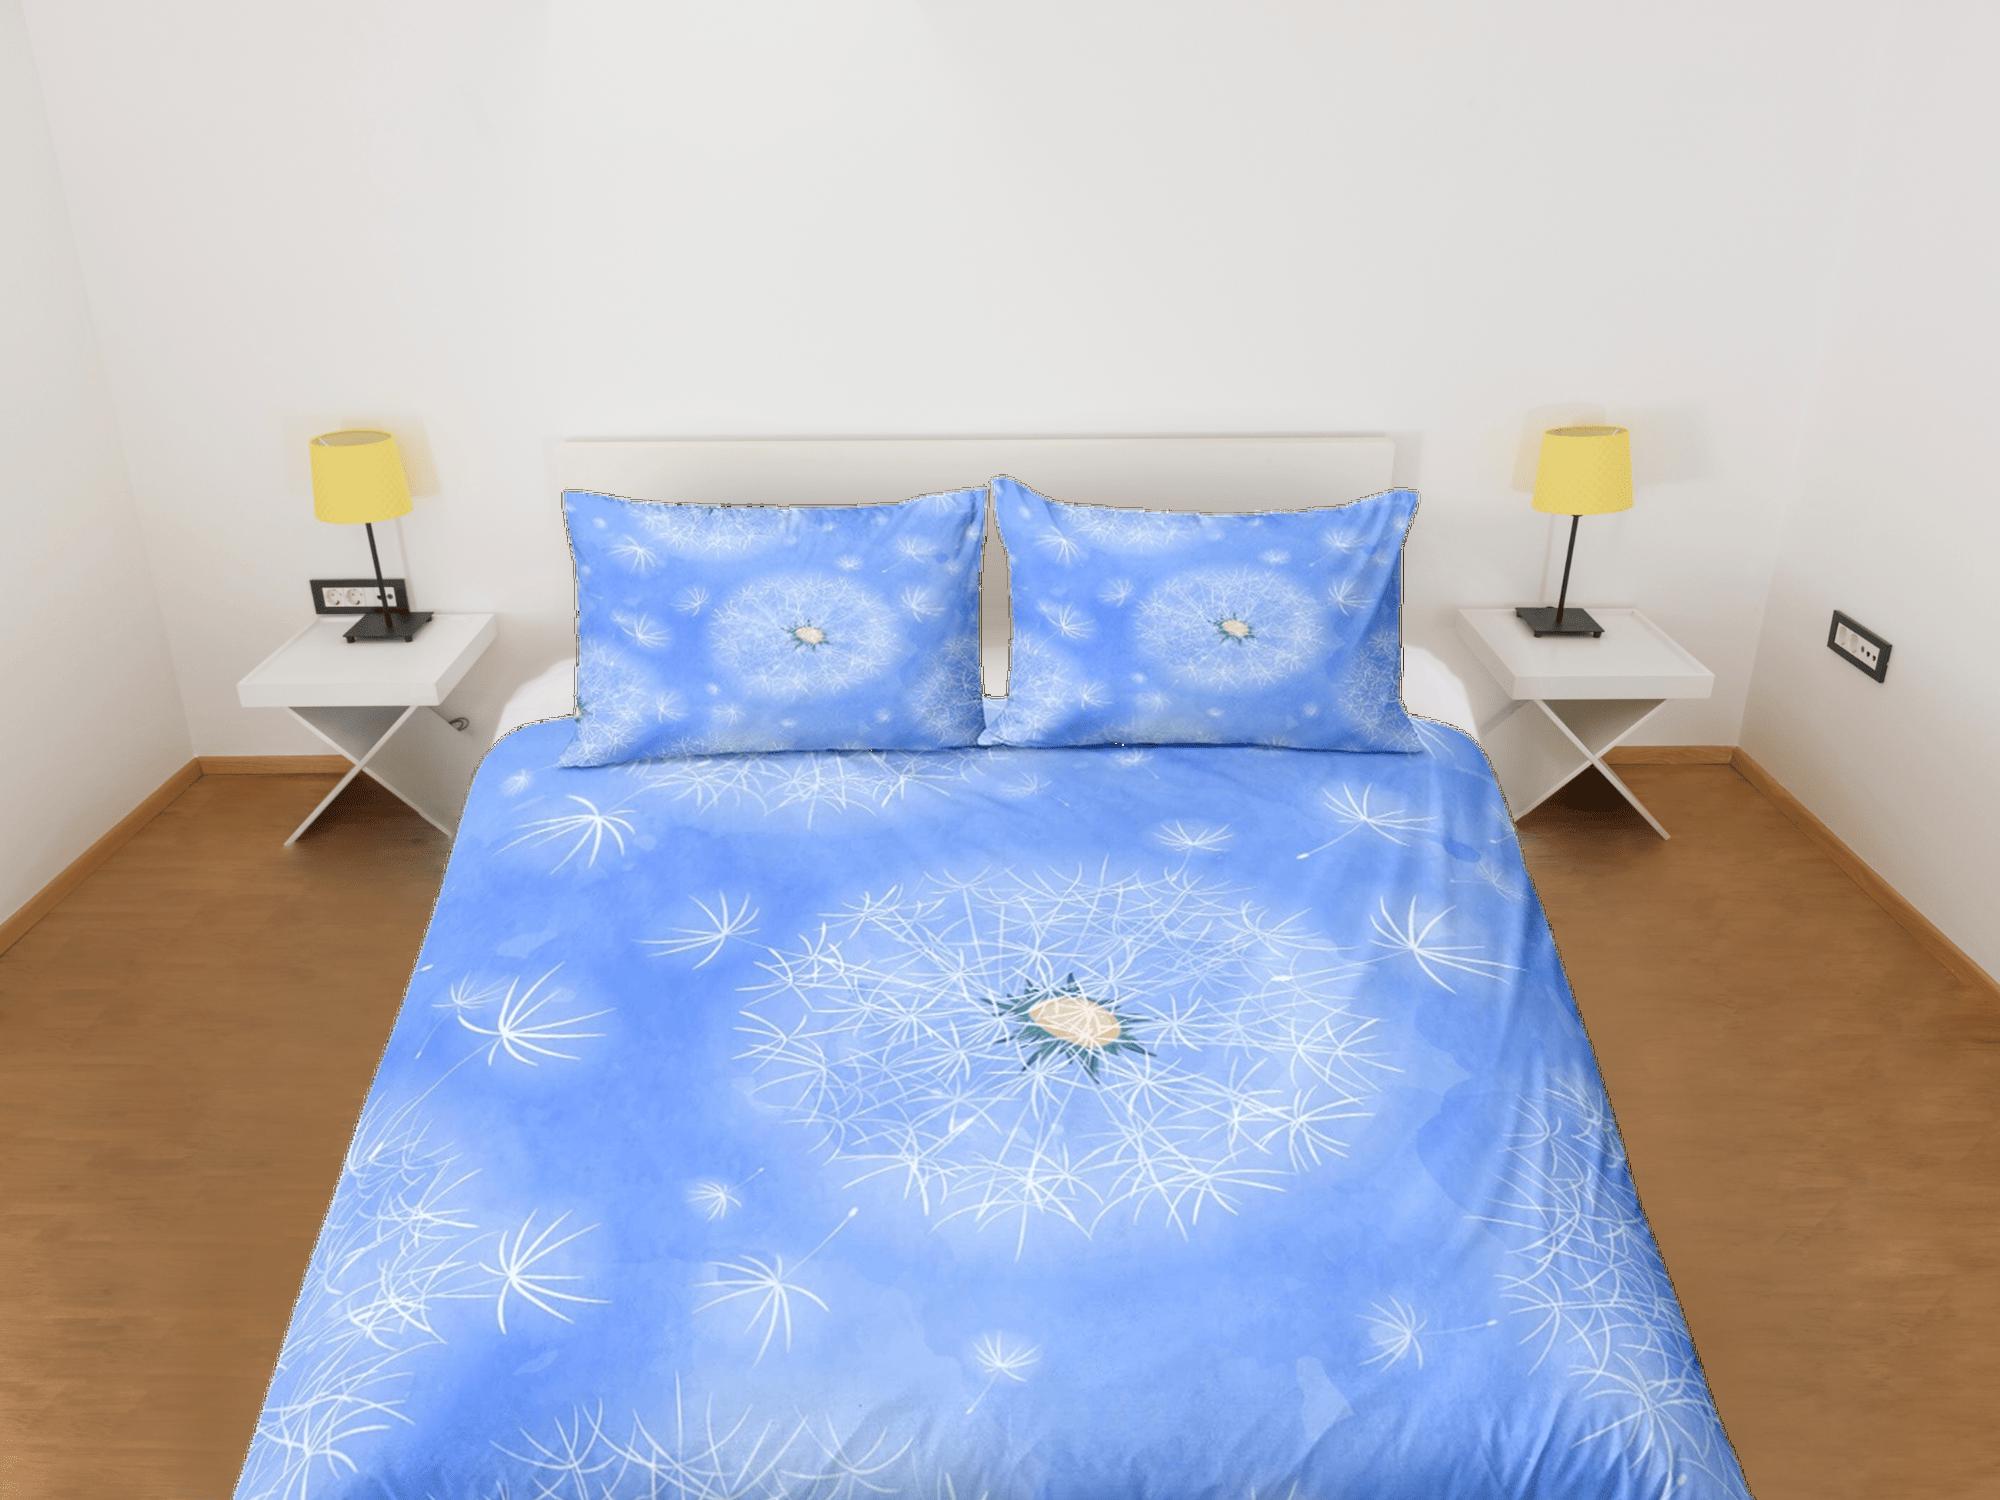 daintyduvet Dandelion floral blue duvet cover colorful bedding, teen girl bedroom, baby girl crib bedding boho maximalist bedspread aesthetic bedding